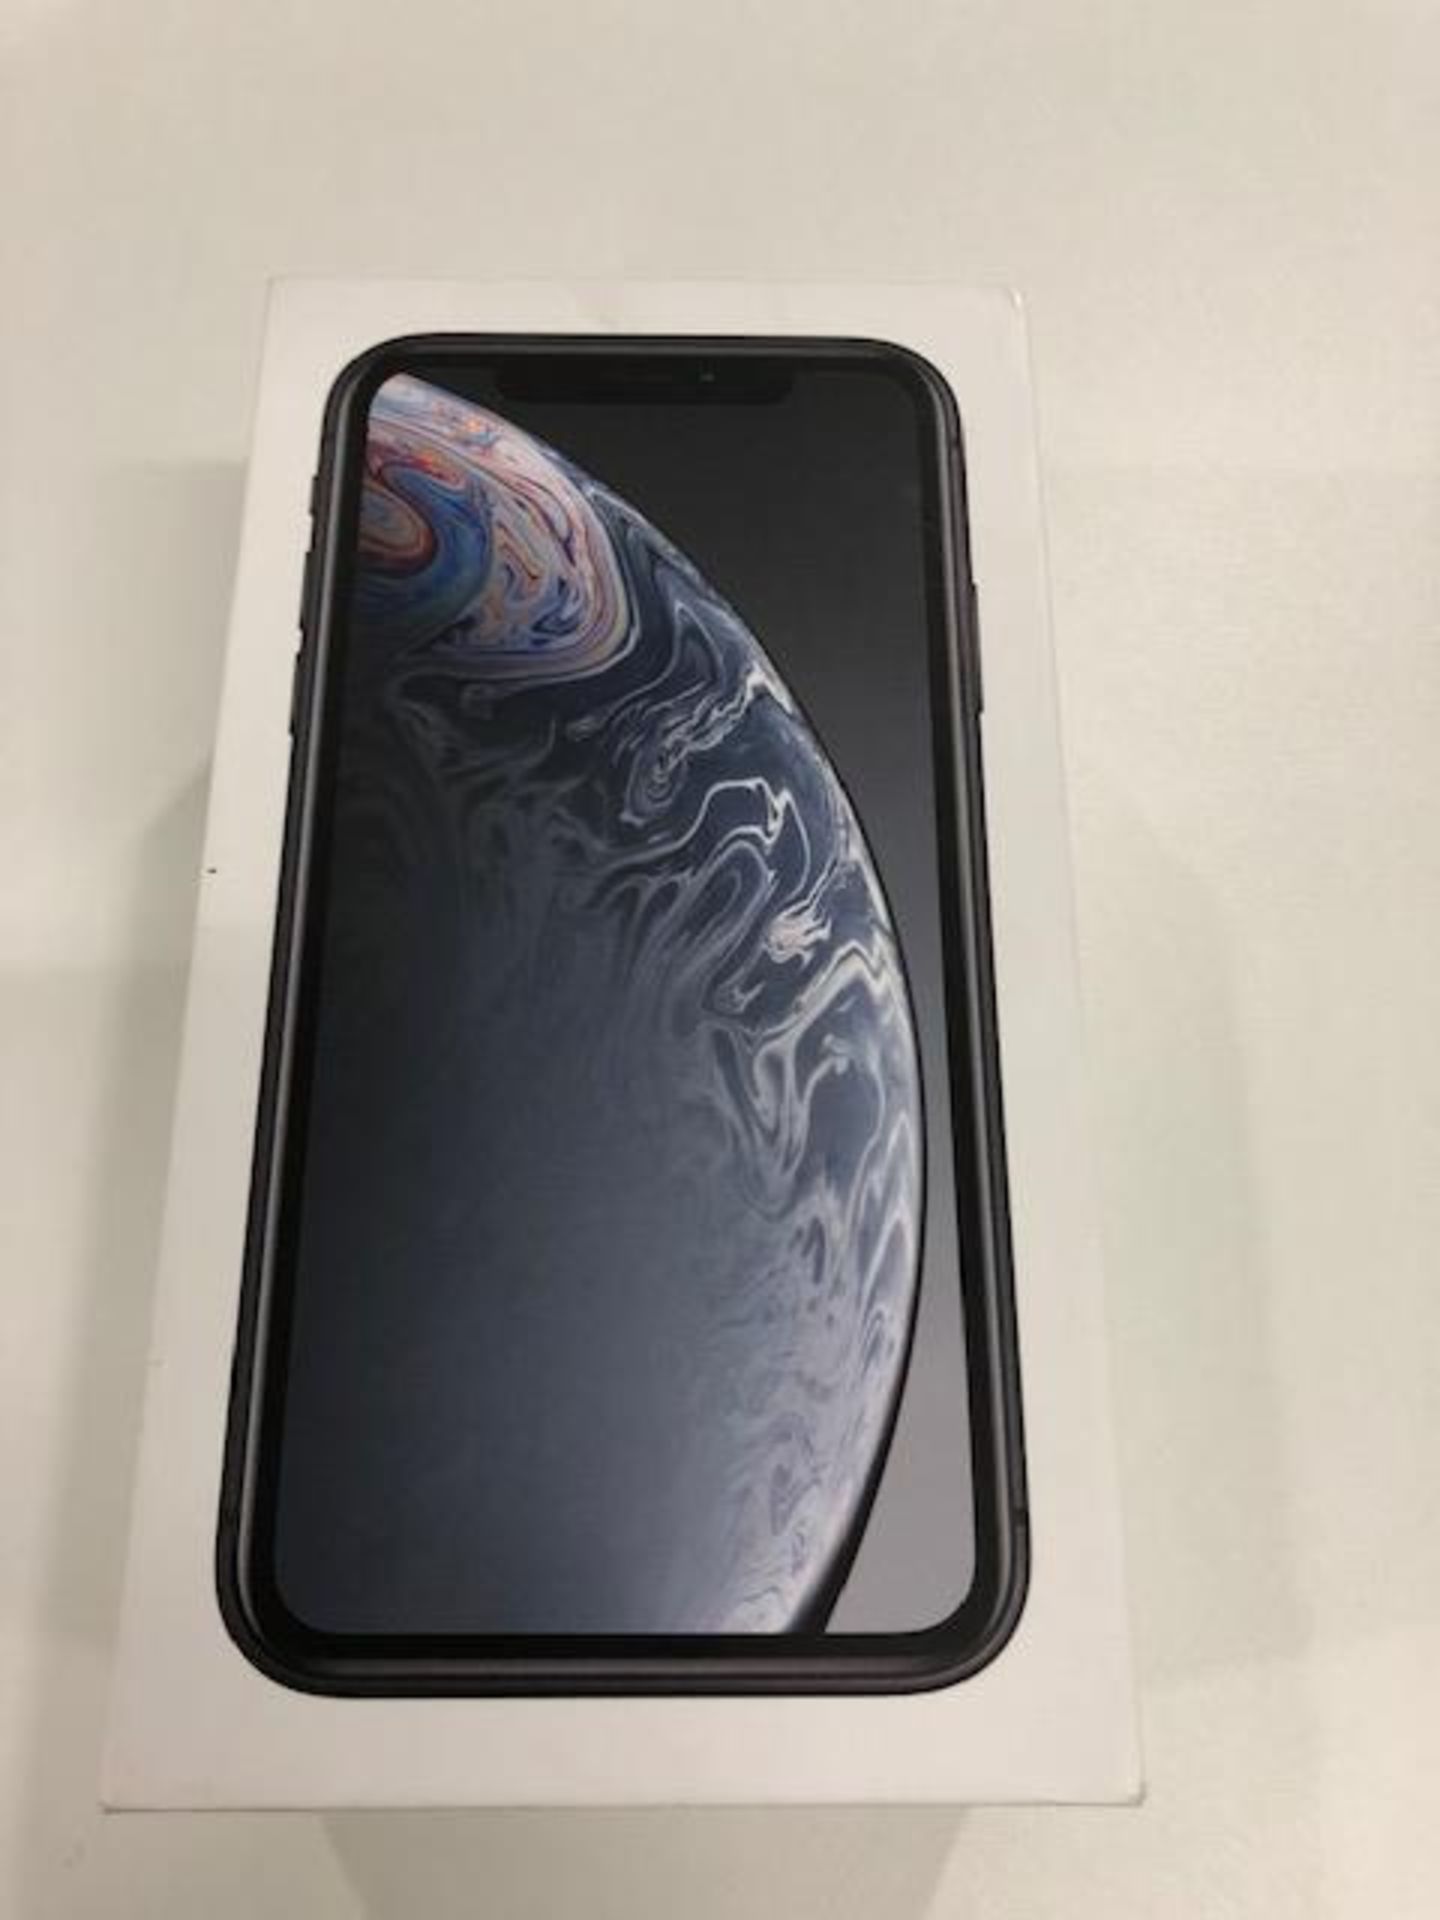 Apple iPhone XR 64GB Smartphone (Unlocked) Black - Image 4 of 4